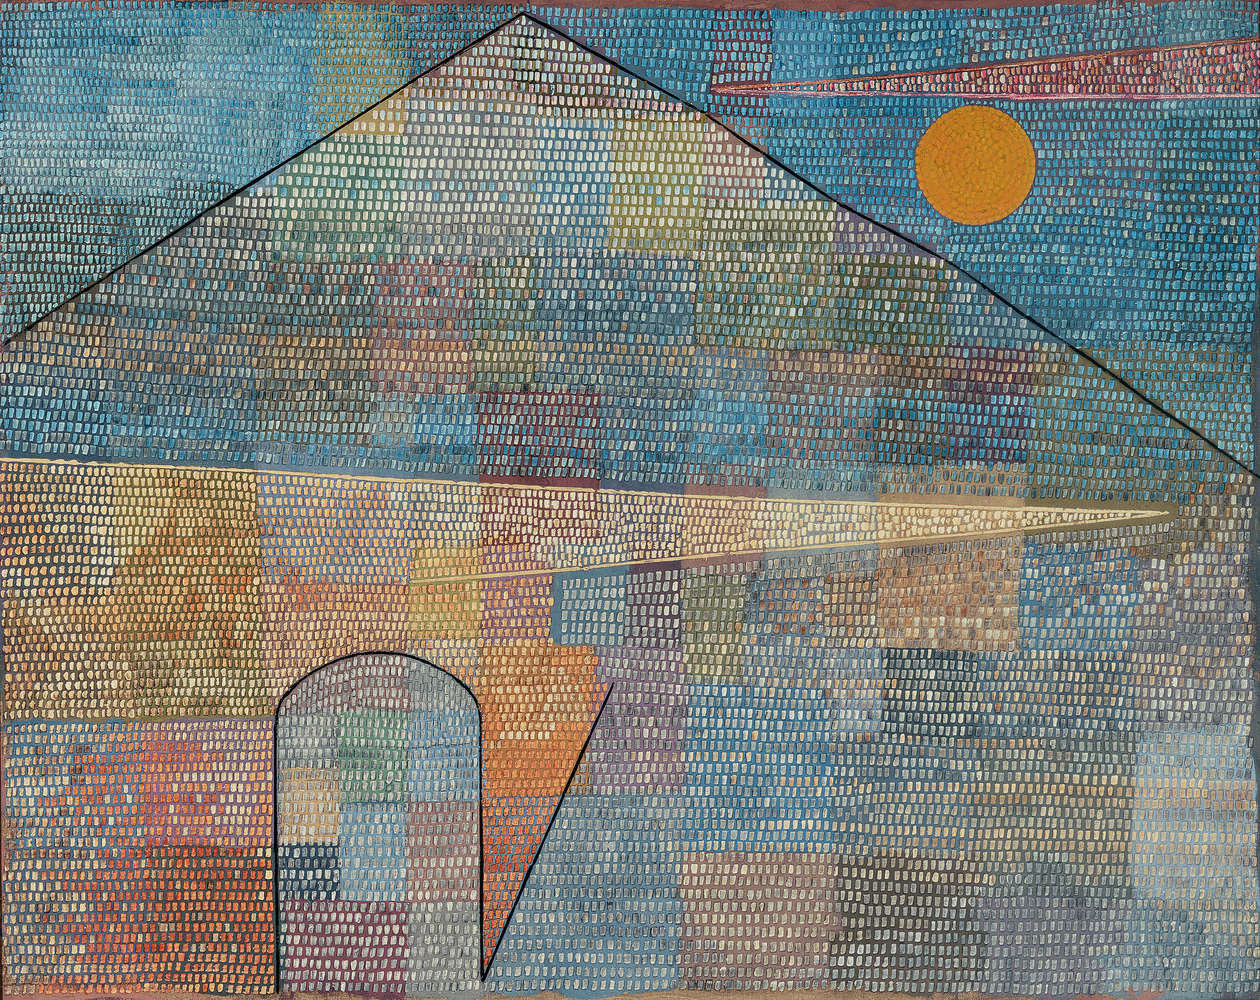             Mural "Ad Parnassum" de Paul Klee
        